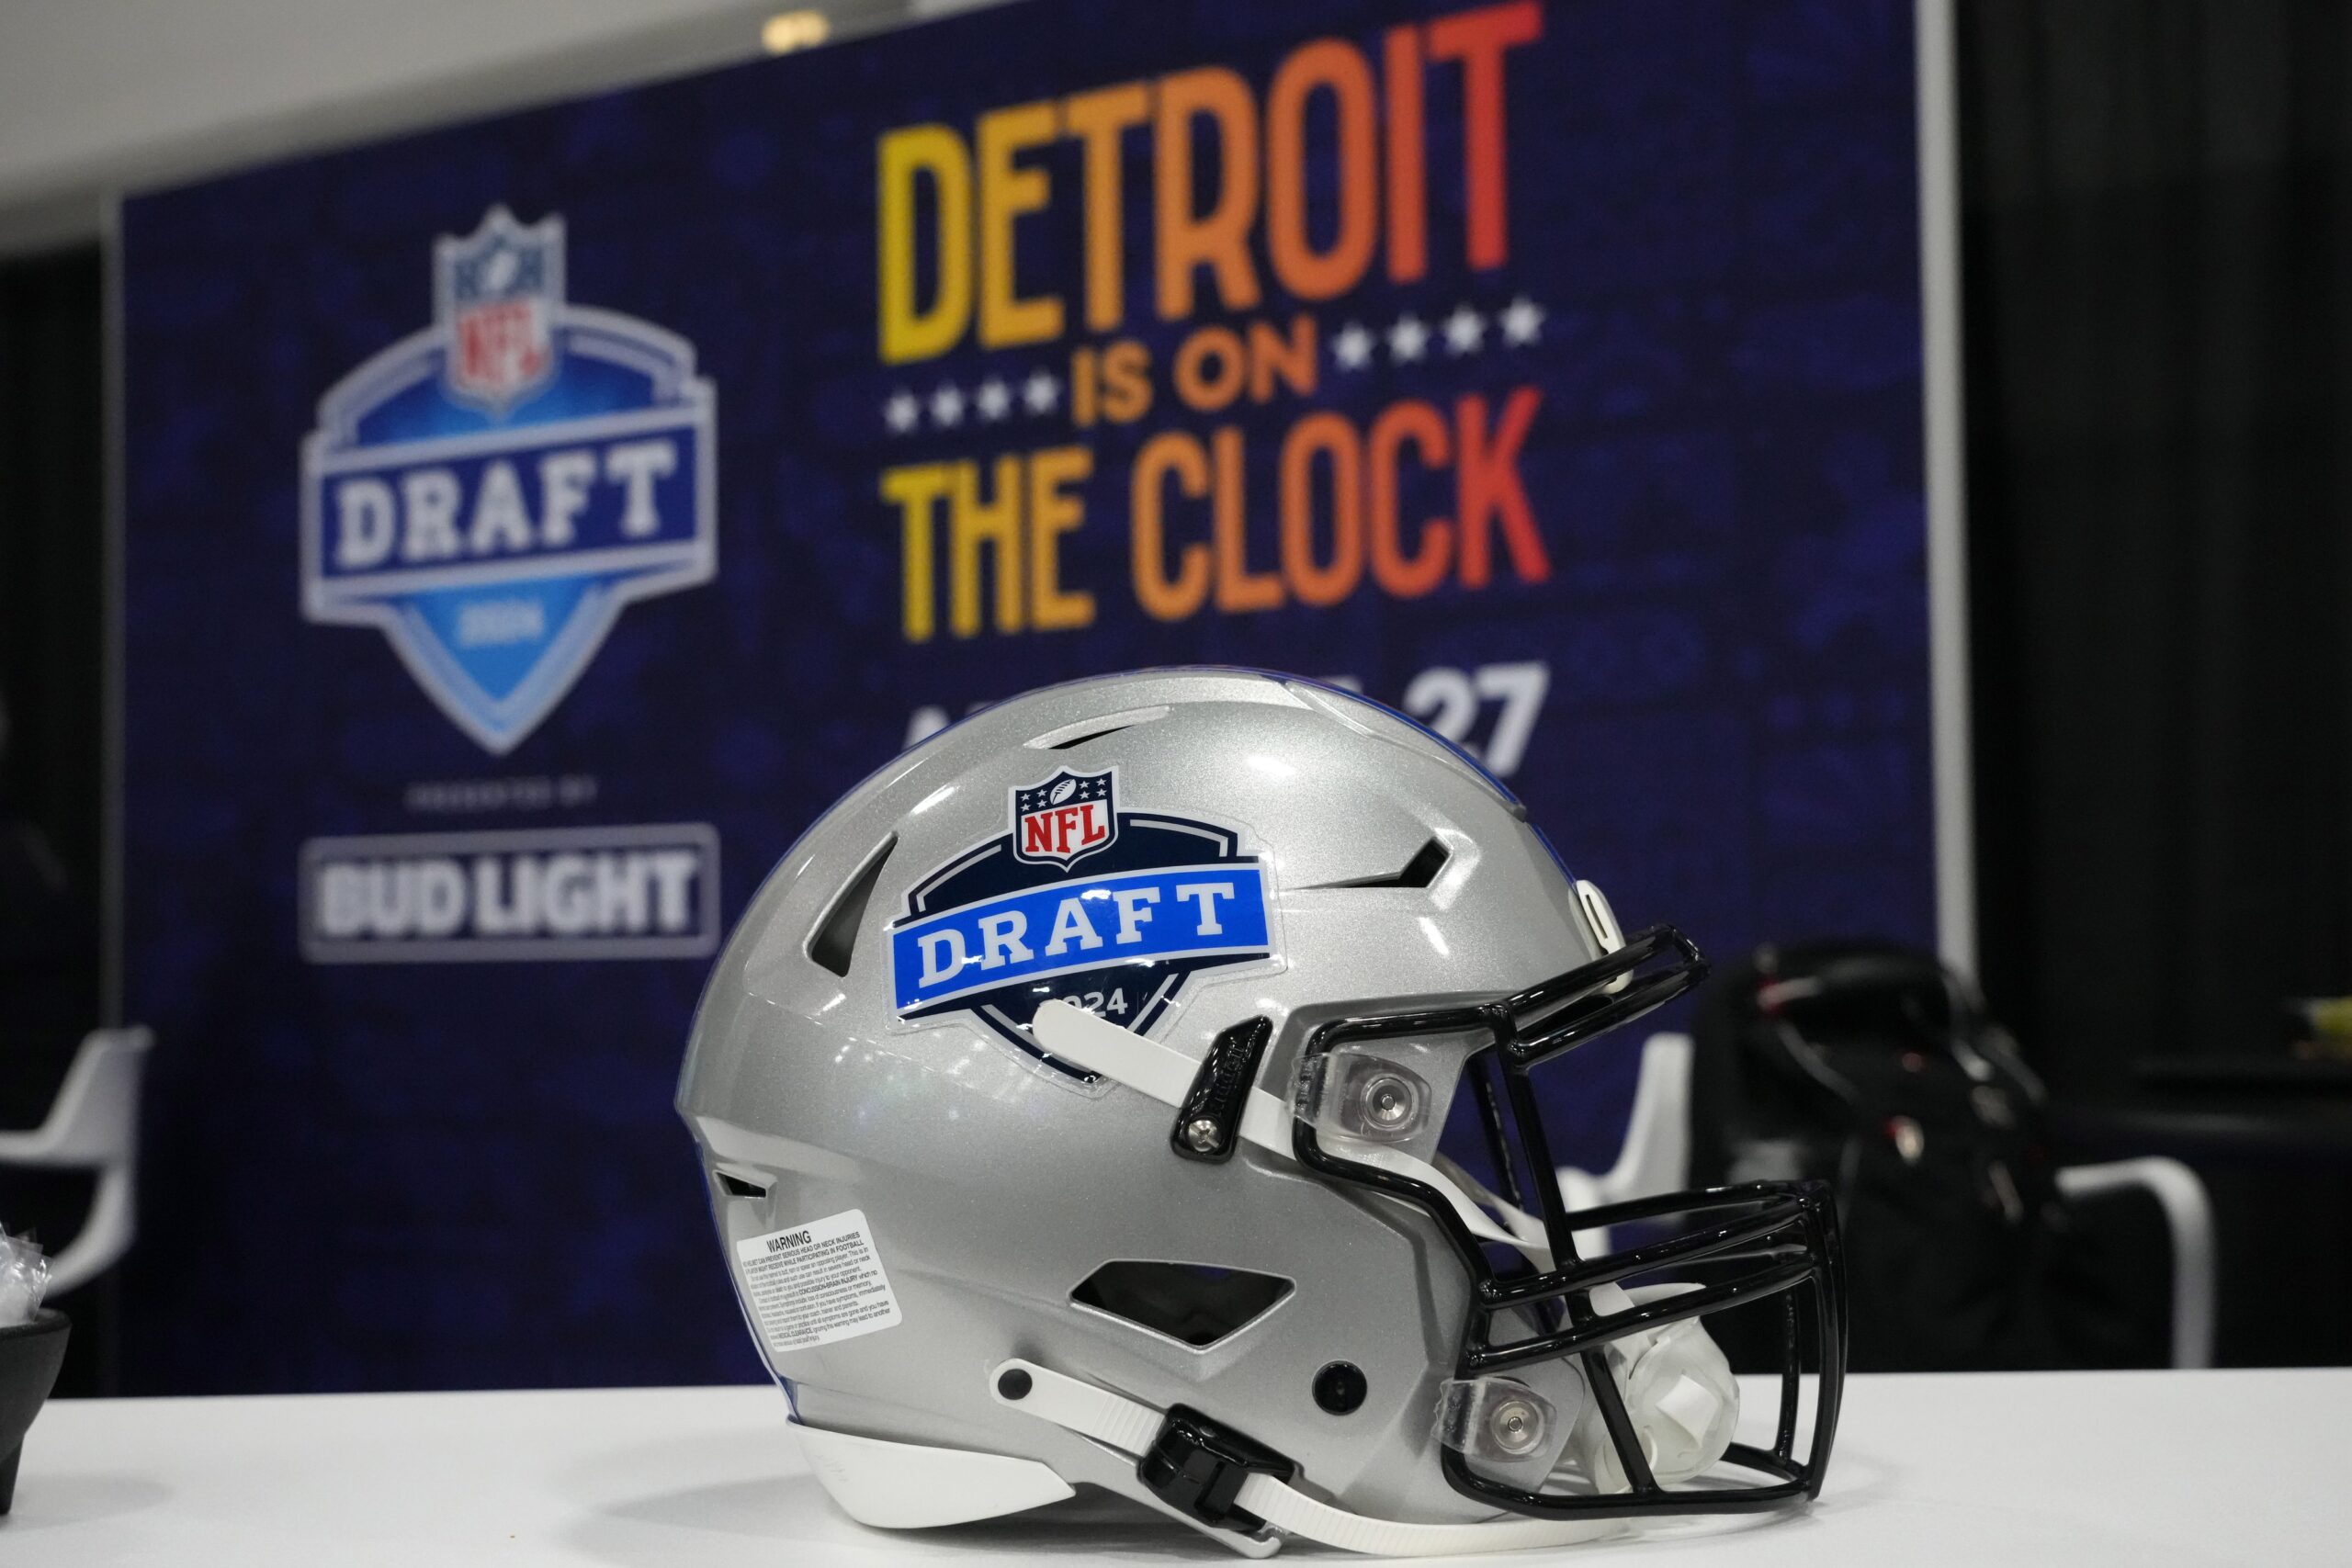 The NFL Draft in Detroit helmet on display at the Super Bowl 58 media center.